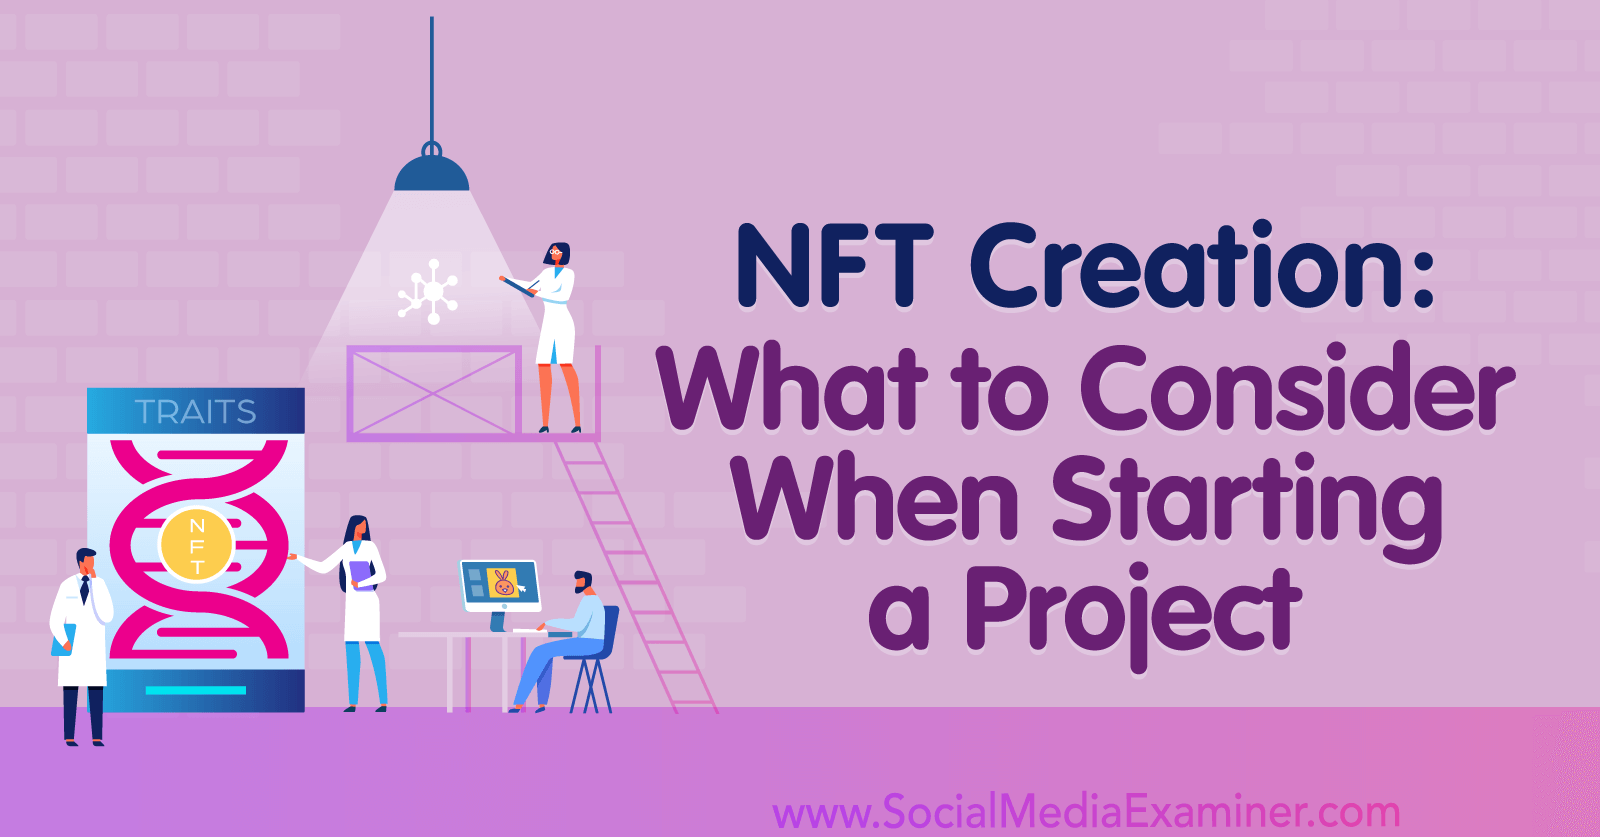 nft-creation-starting-a-project-social-media-examiner